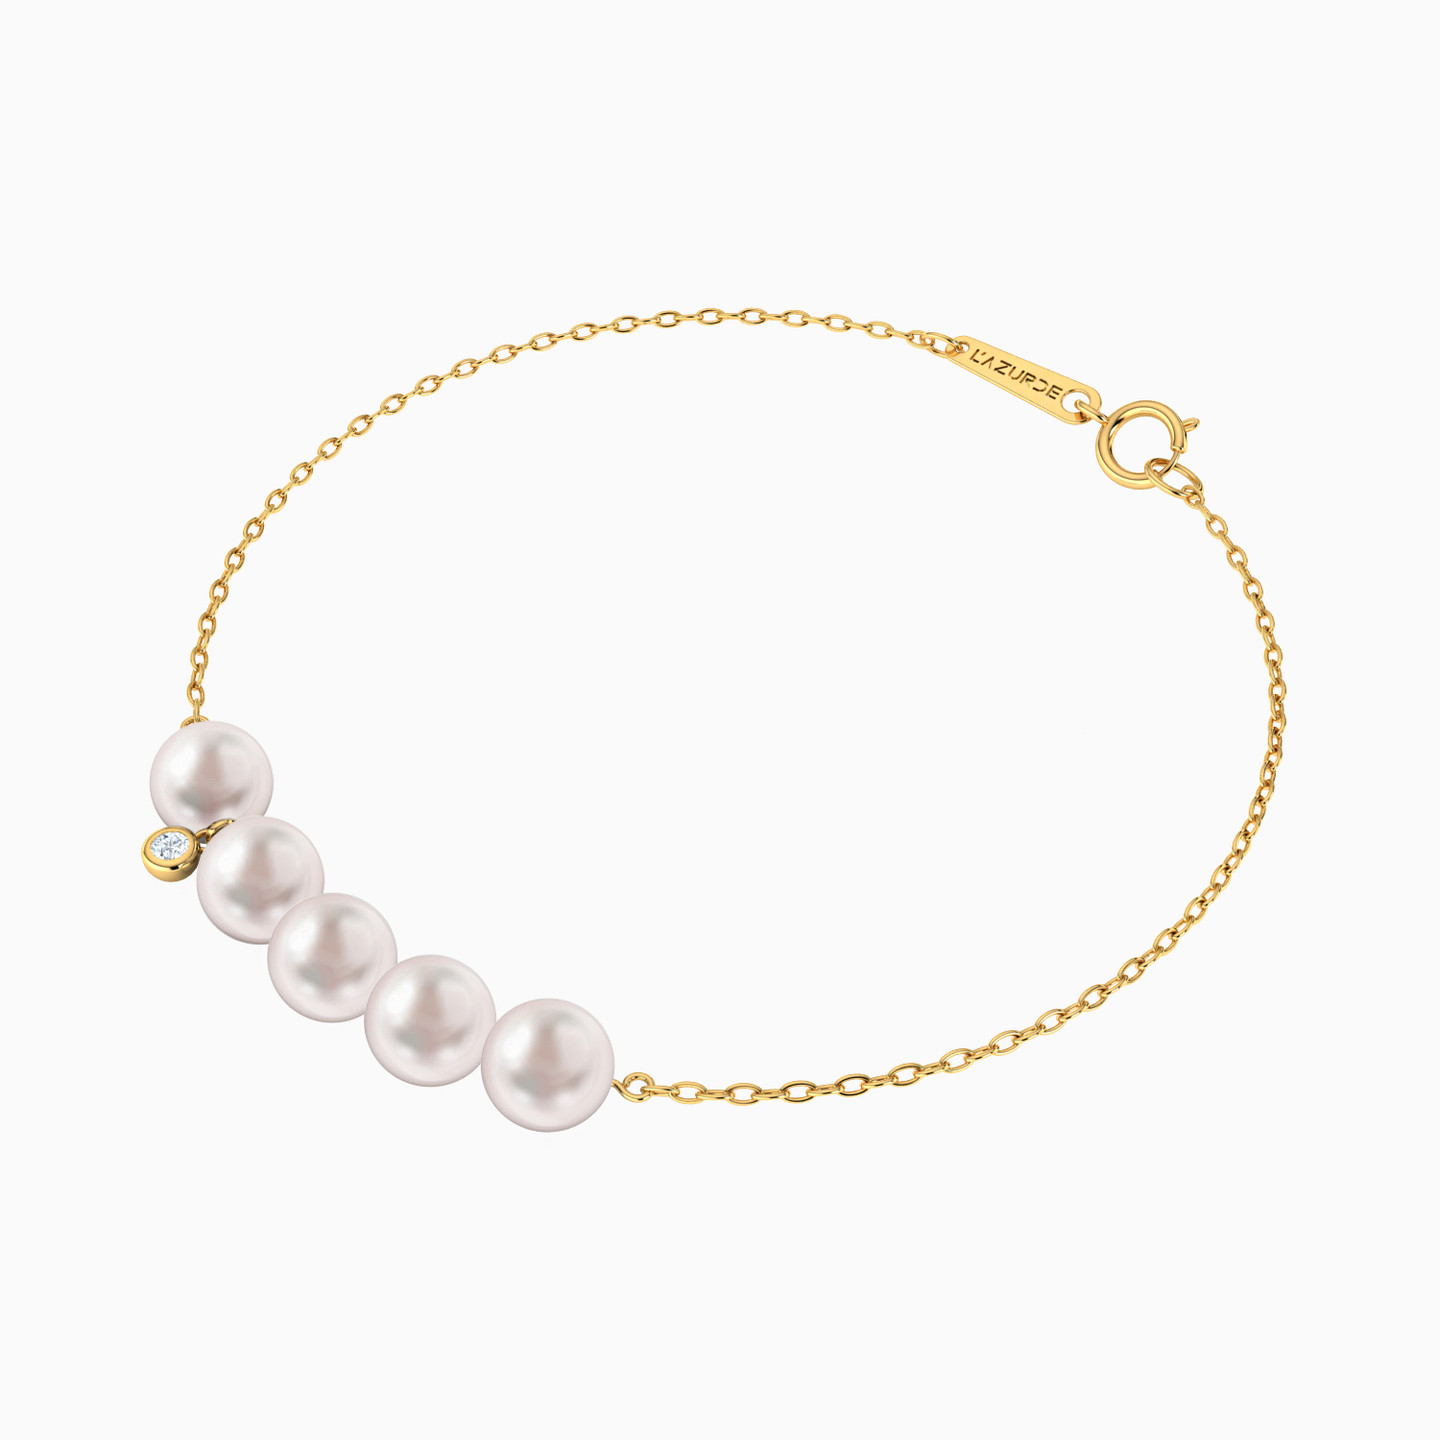 18K Gold Diamods & Pearls Chain Bracelet - 2